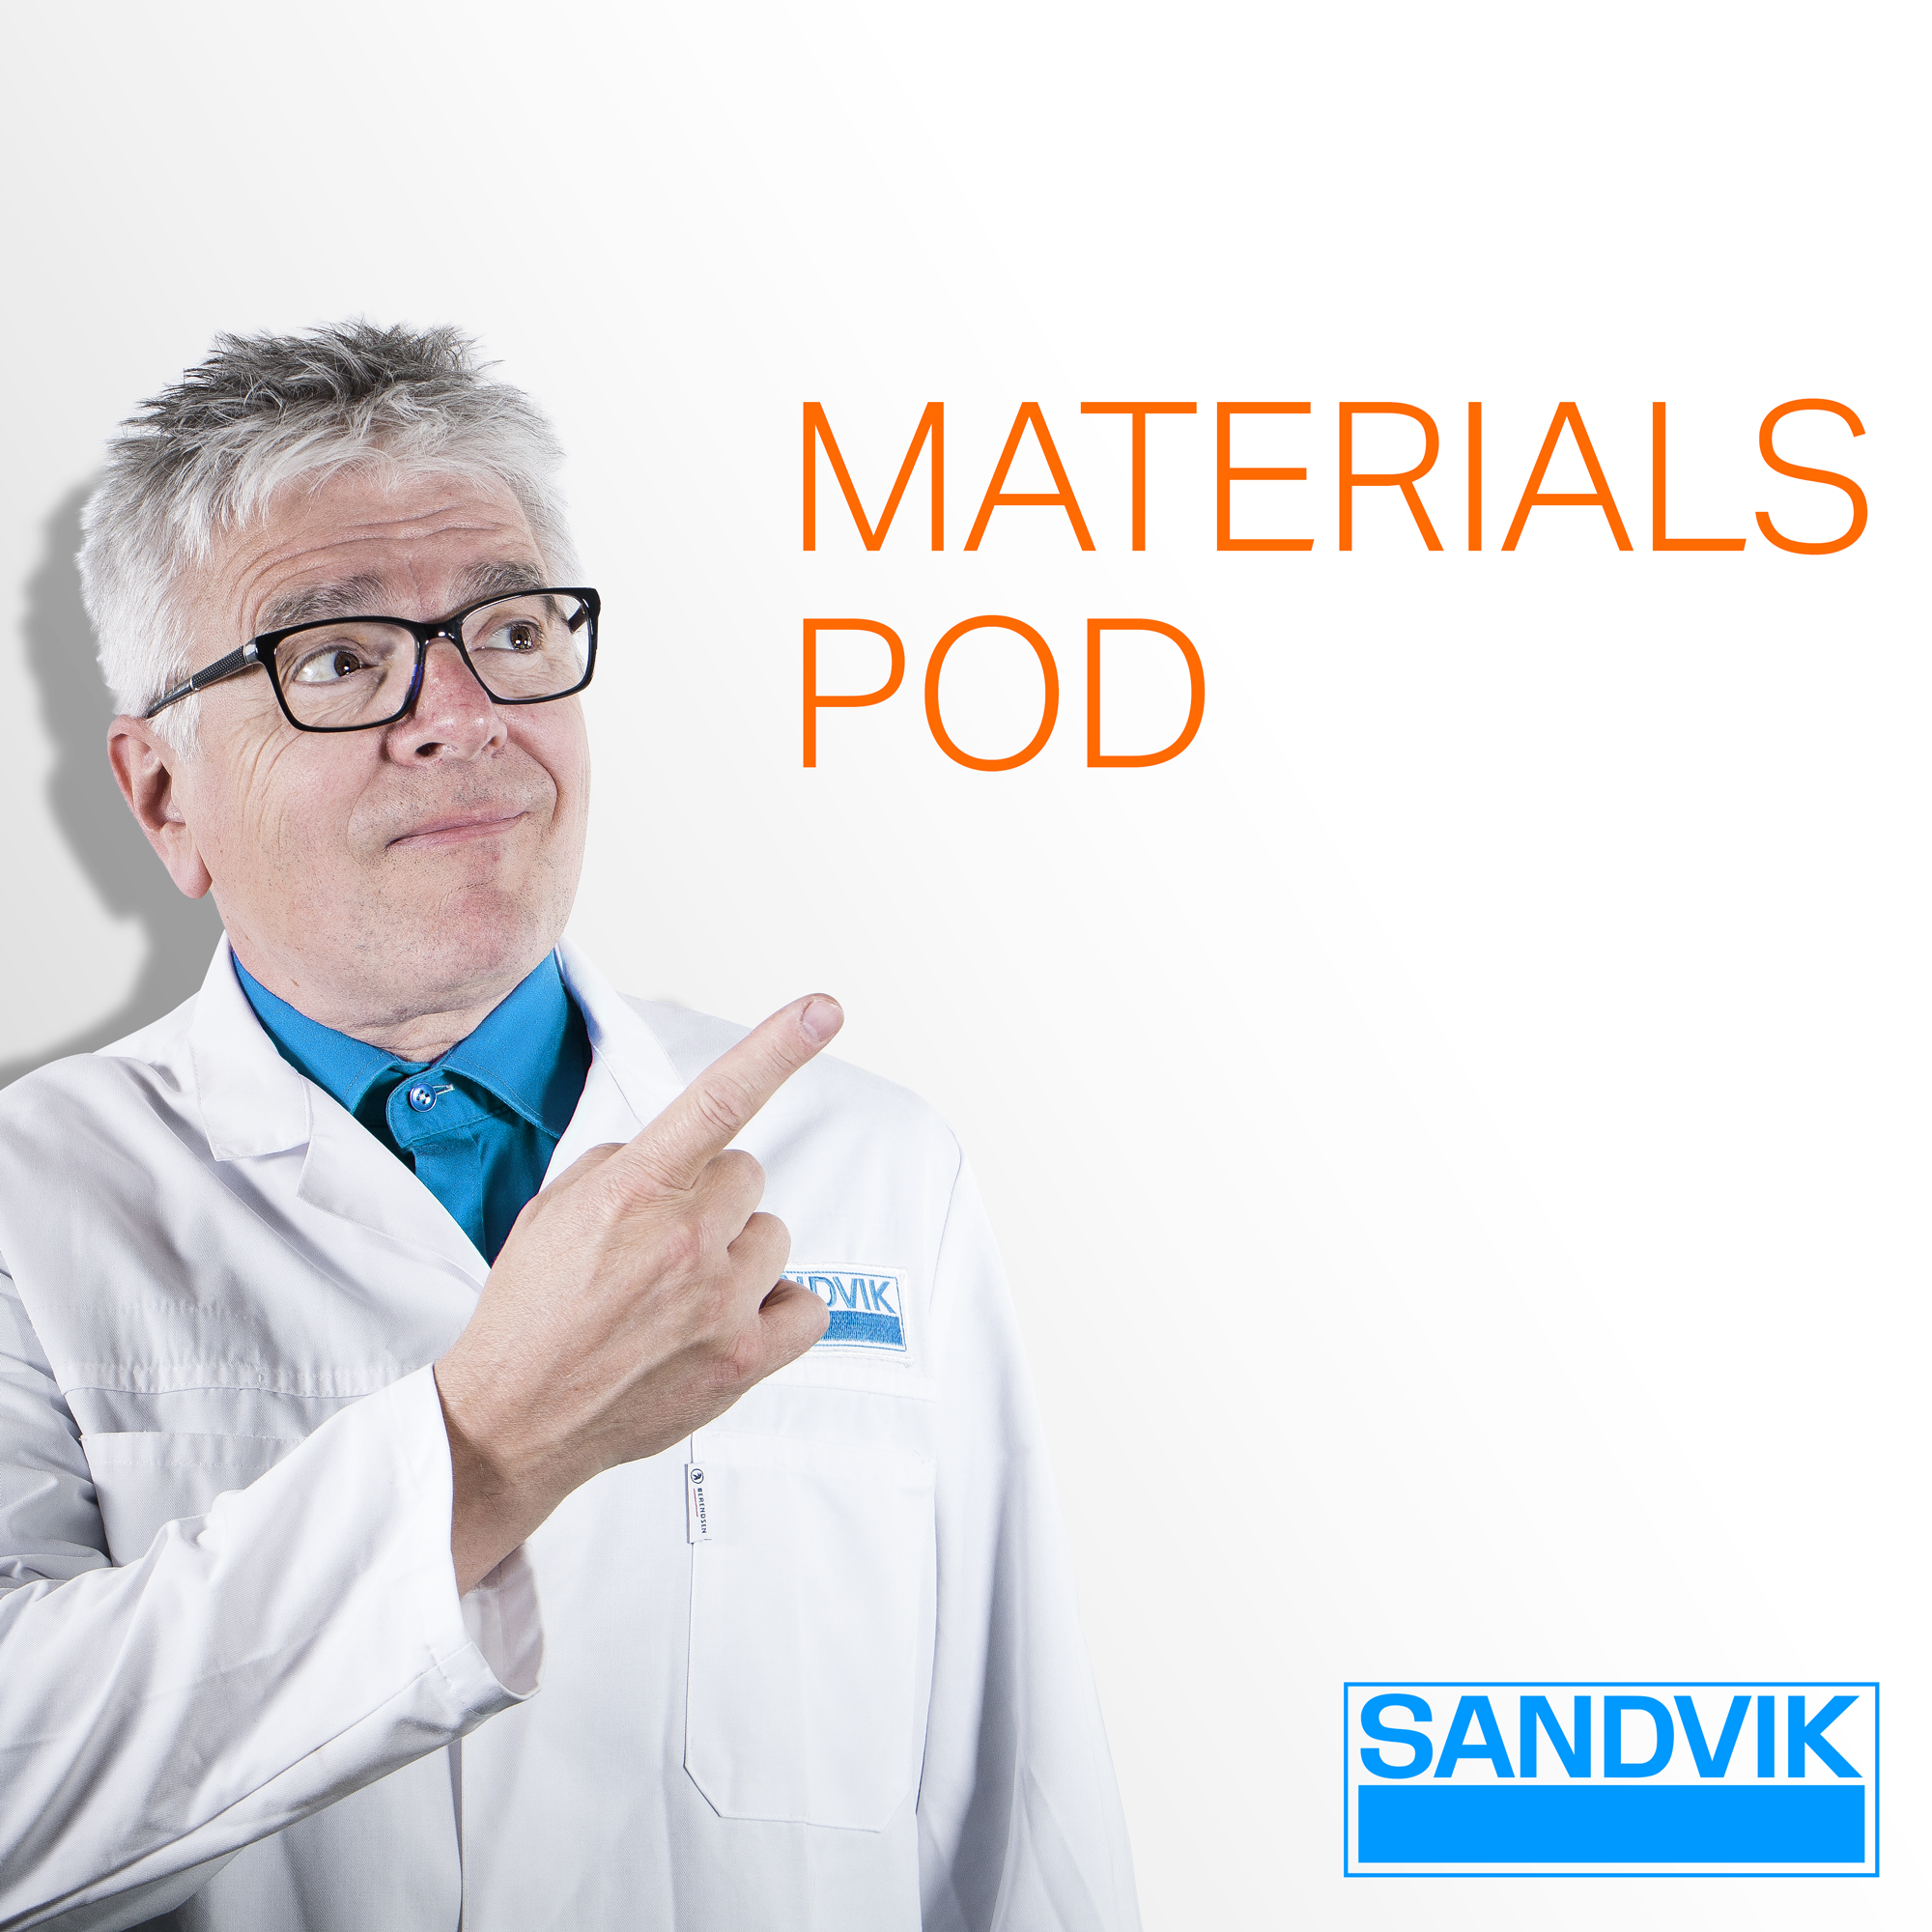 Sandvik Materials Pod